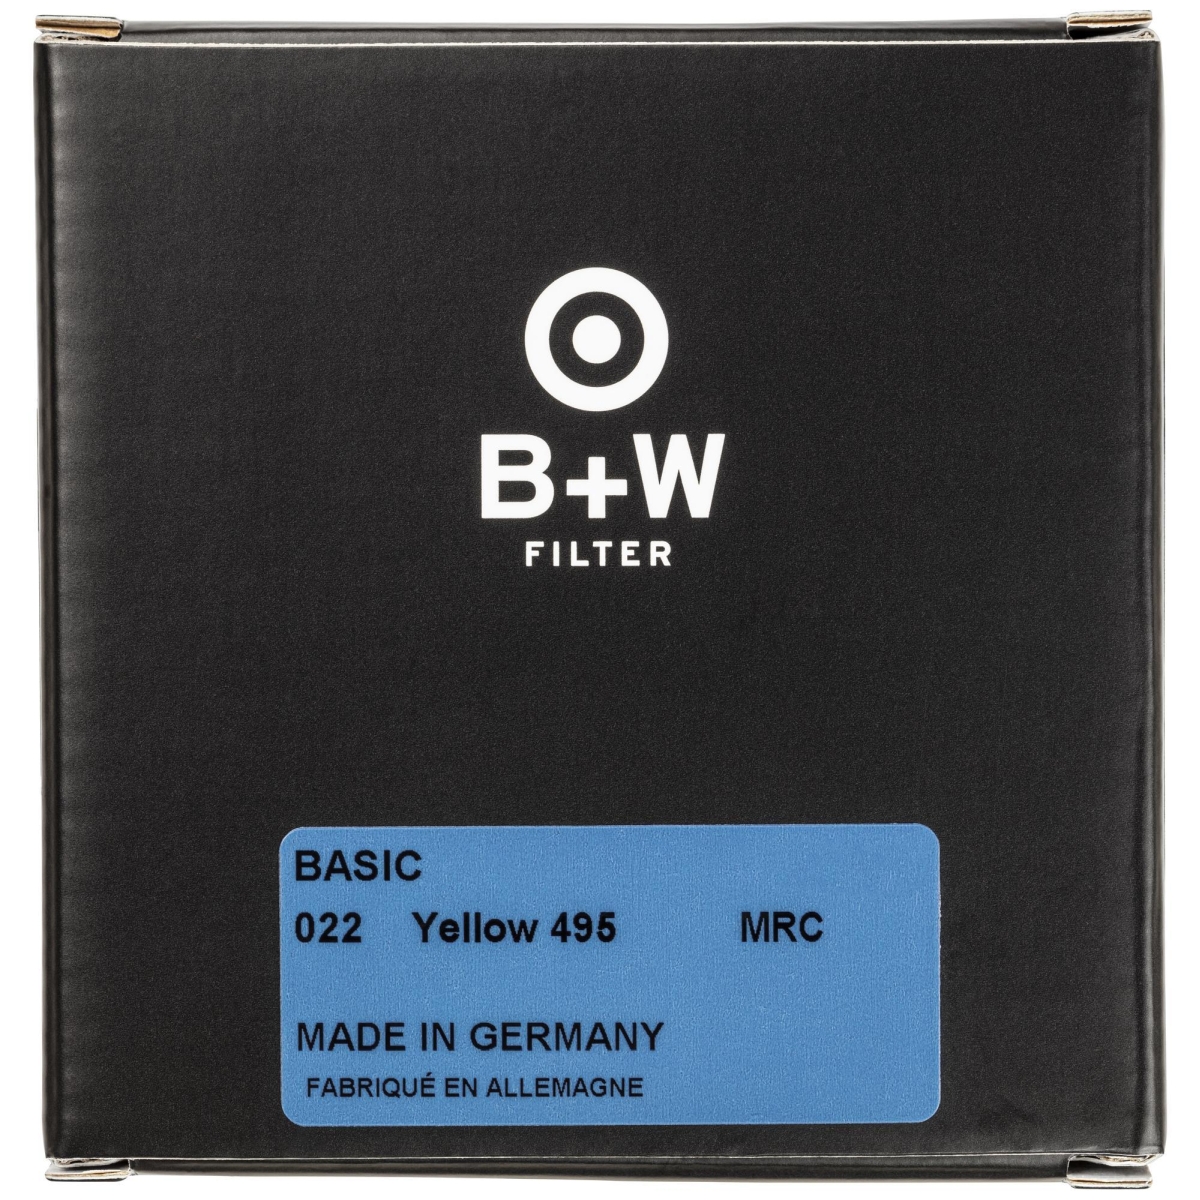 B+W Gelb Filter 49 mm 495 MRC Basic